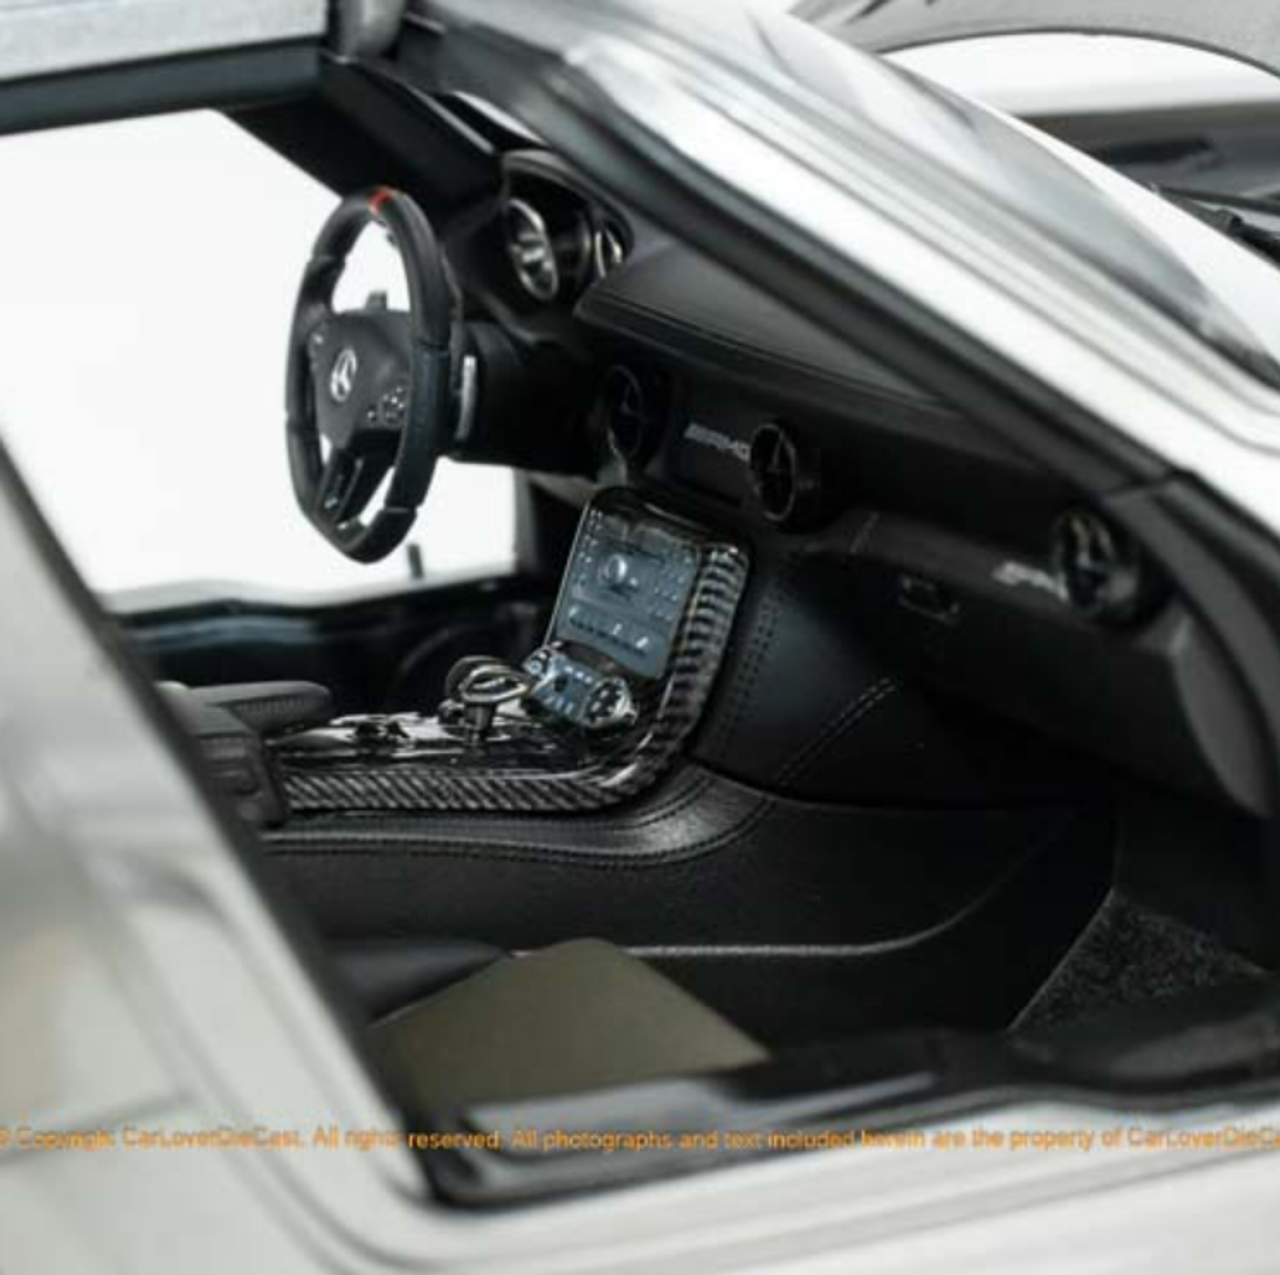 1/18 MINICHAMPS Mercedes-Benz AMG SLS Black Series Silver CLDC exclusive CLDC (Limited 300 Pieces)